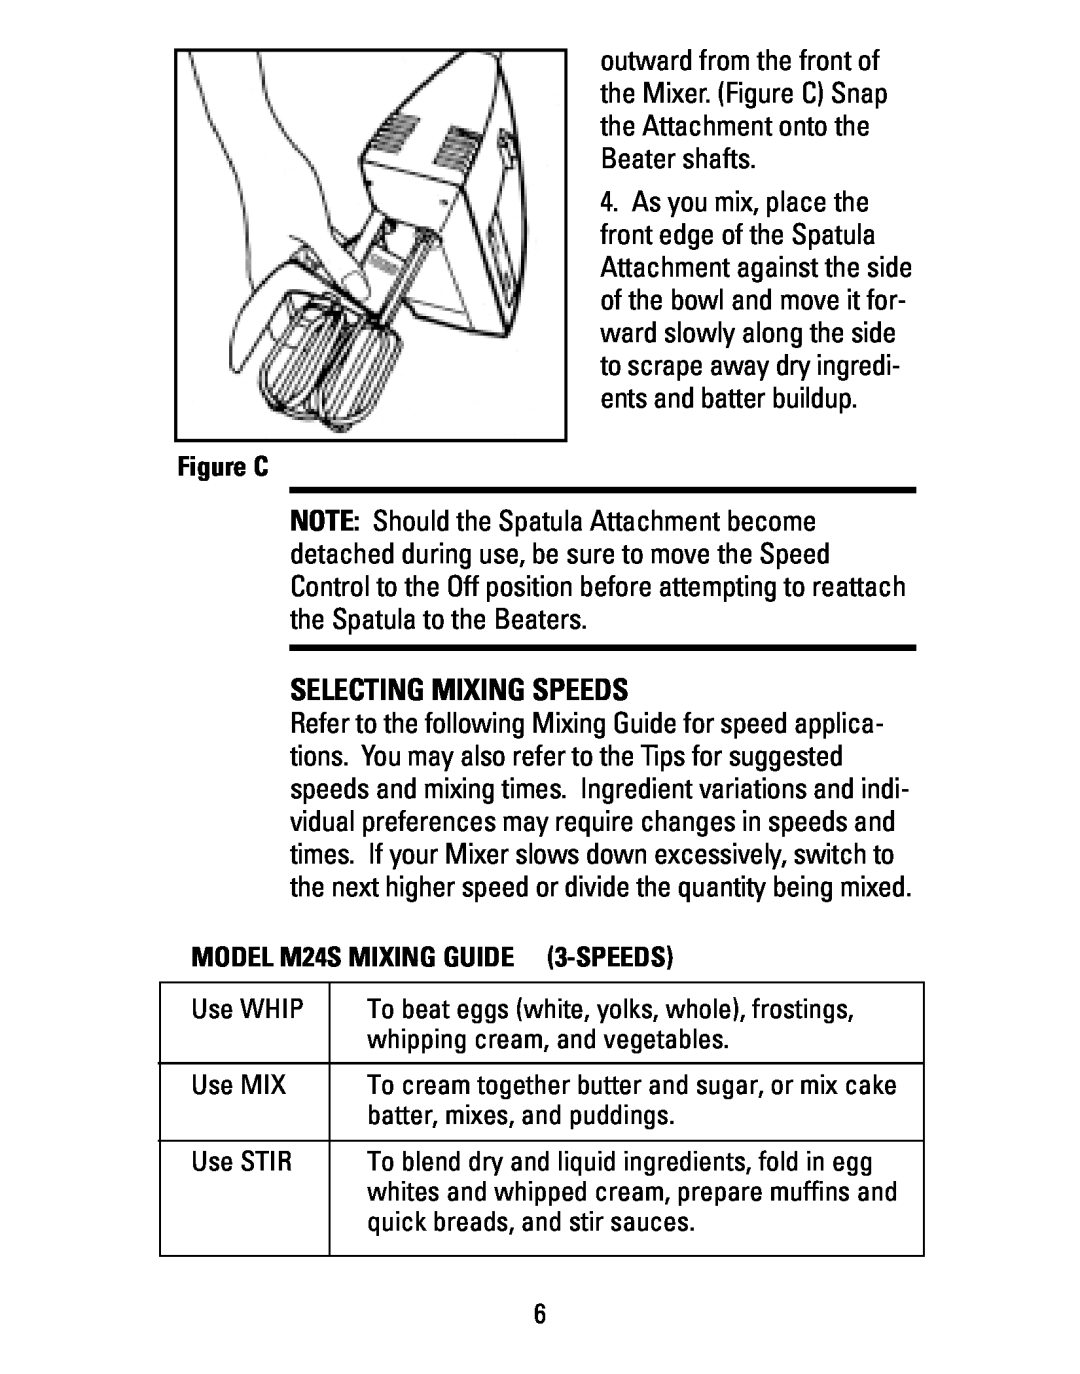 Black & Decker M22S manual Selecting Mixing Speeds, Figure C, MODEL M24S MIXING GUIDE 3-SPEEDS 